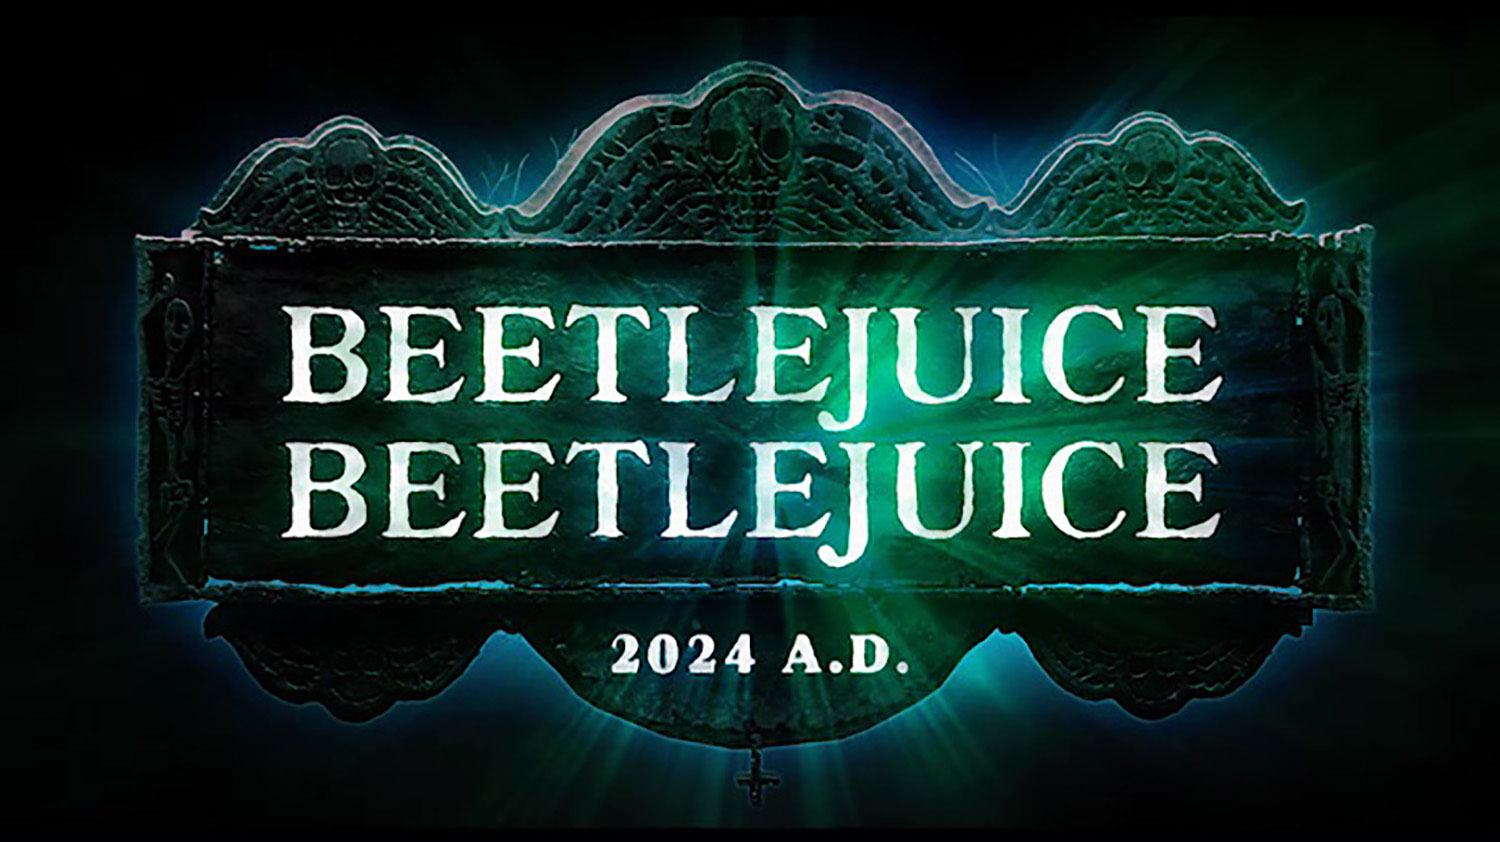 Beetlejuice Beetlejuice soll dieses Jahr erscheinen